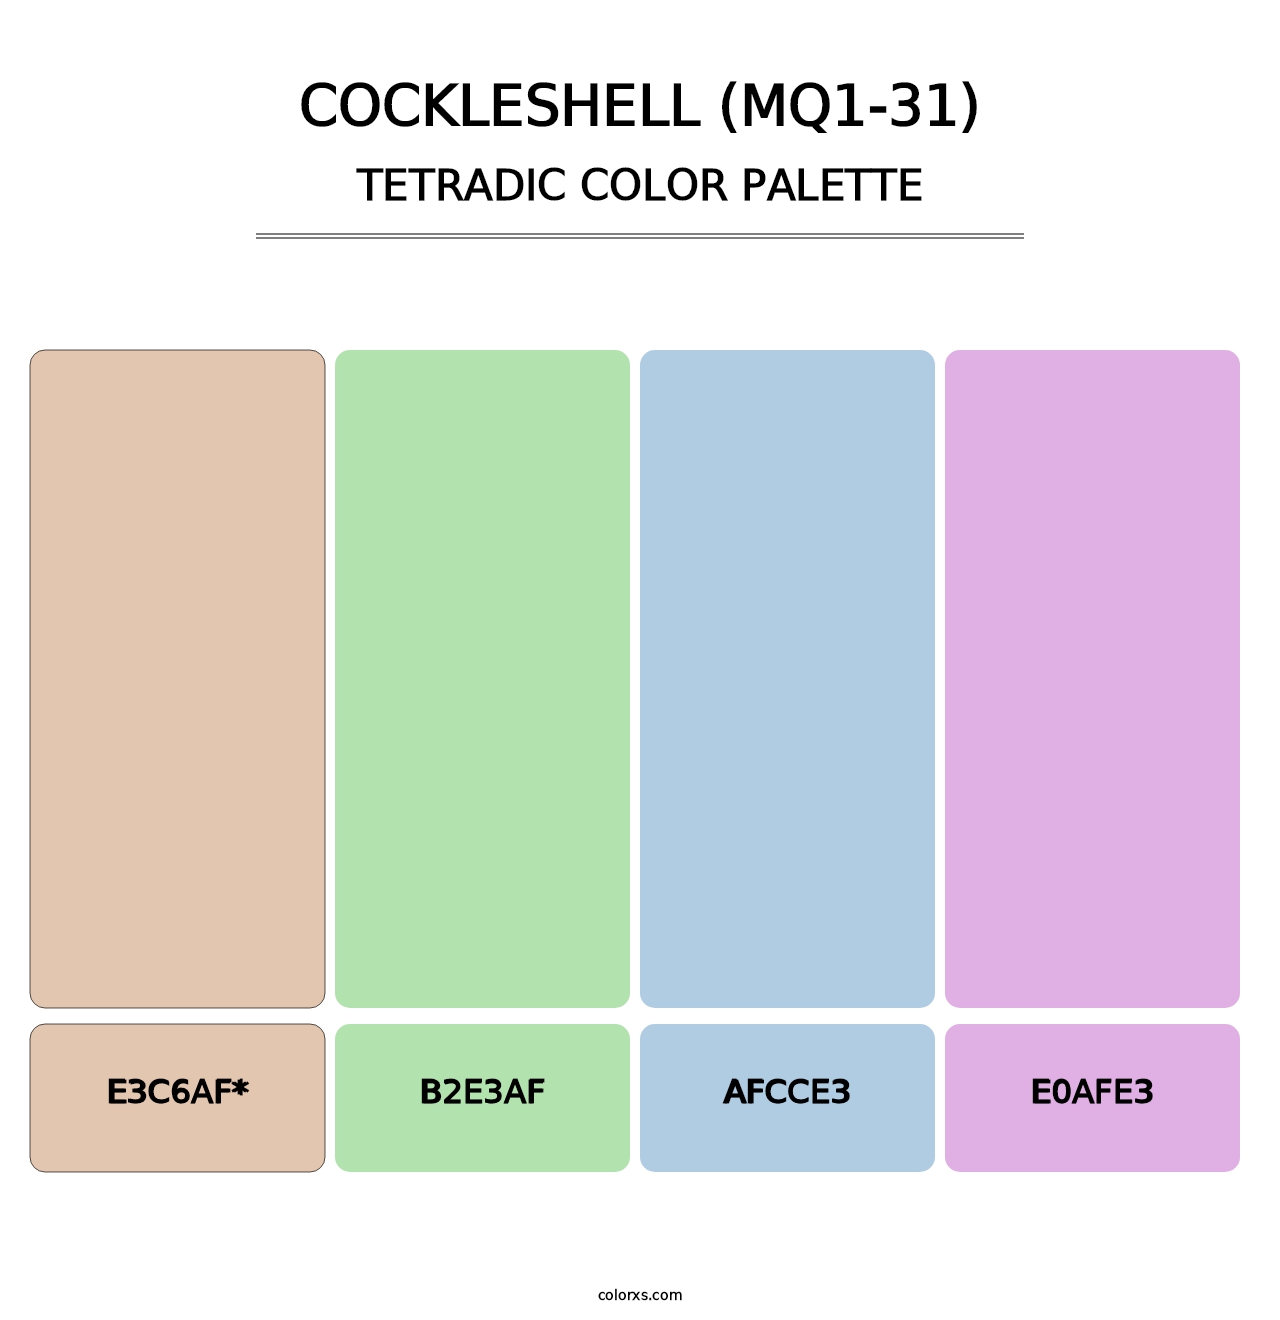 Cockleshell (MQ1-31) - Tetradic Color Palette